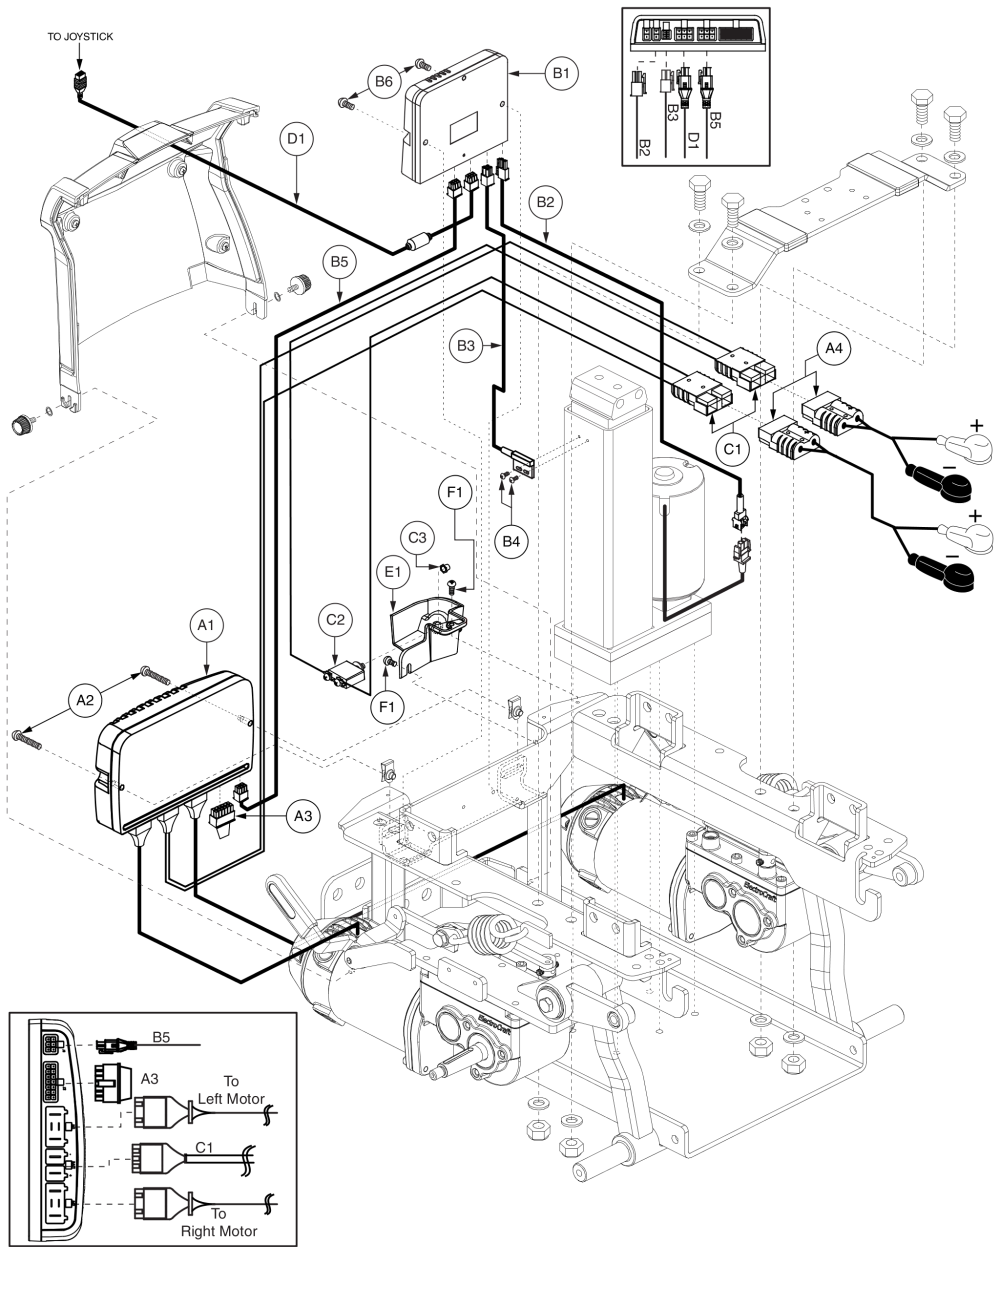 Q-logic, Power Seat Thru Joystick, Electronics Assy, Q6 Edge X parts diagram